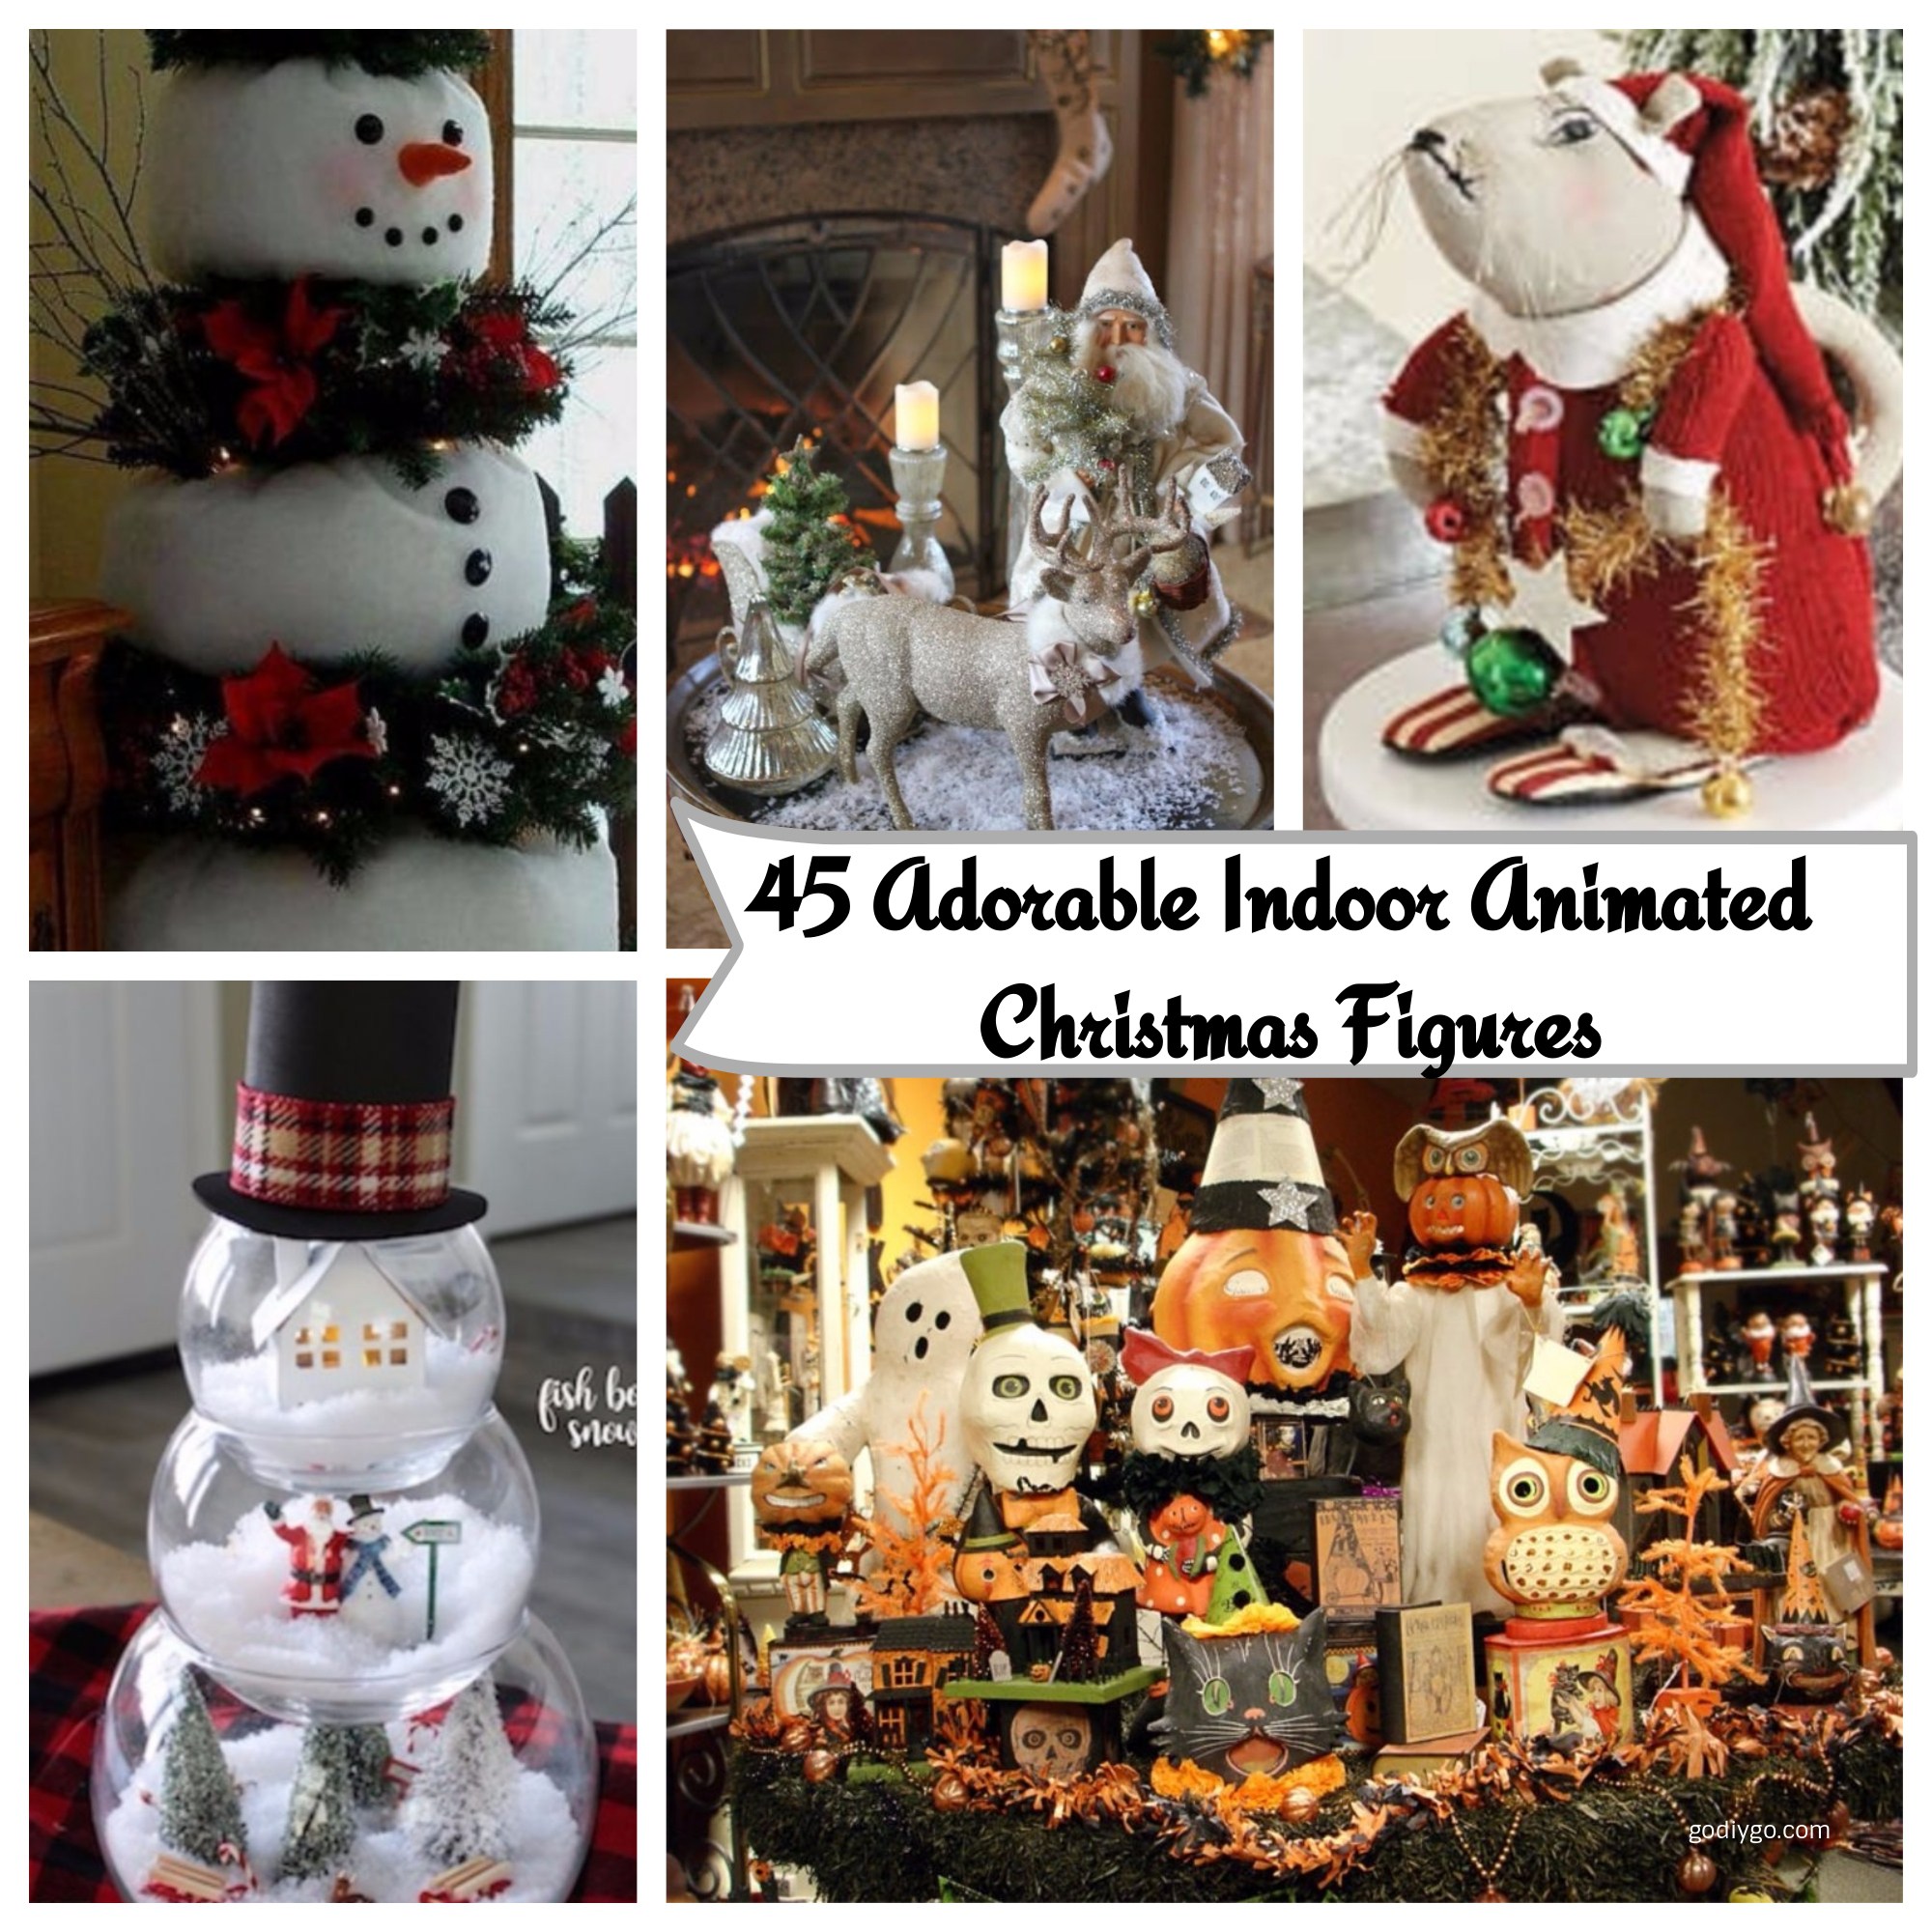 45 Adorable Indoor Animated Christmas Figures - GODIYGO.COM